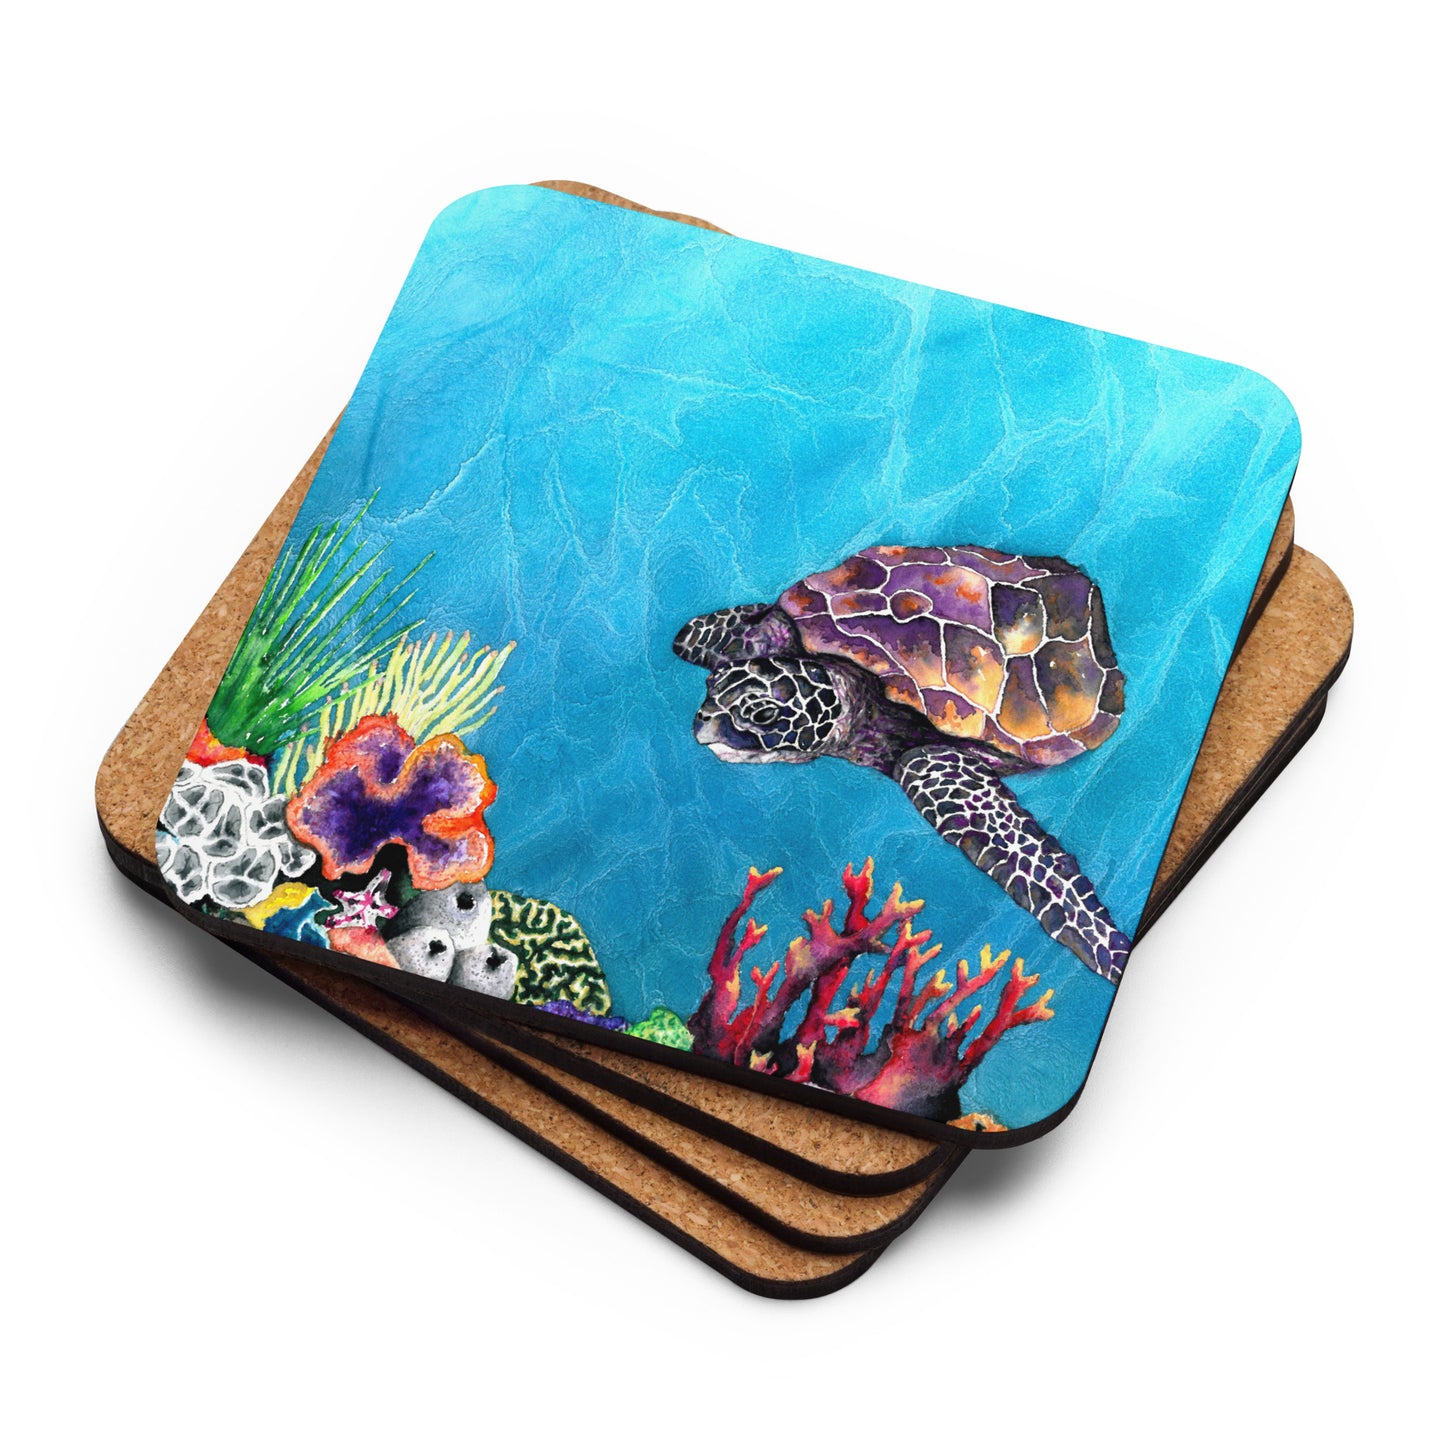 Sea Turtle Coaster Set